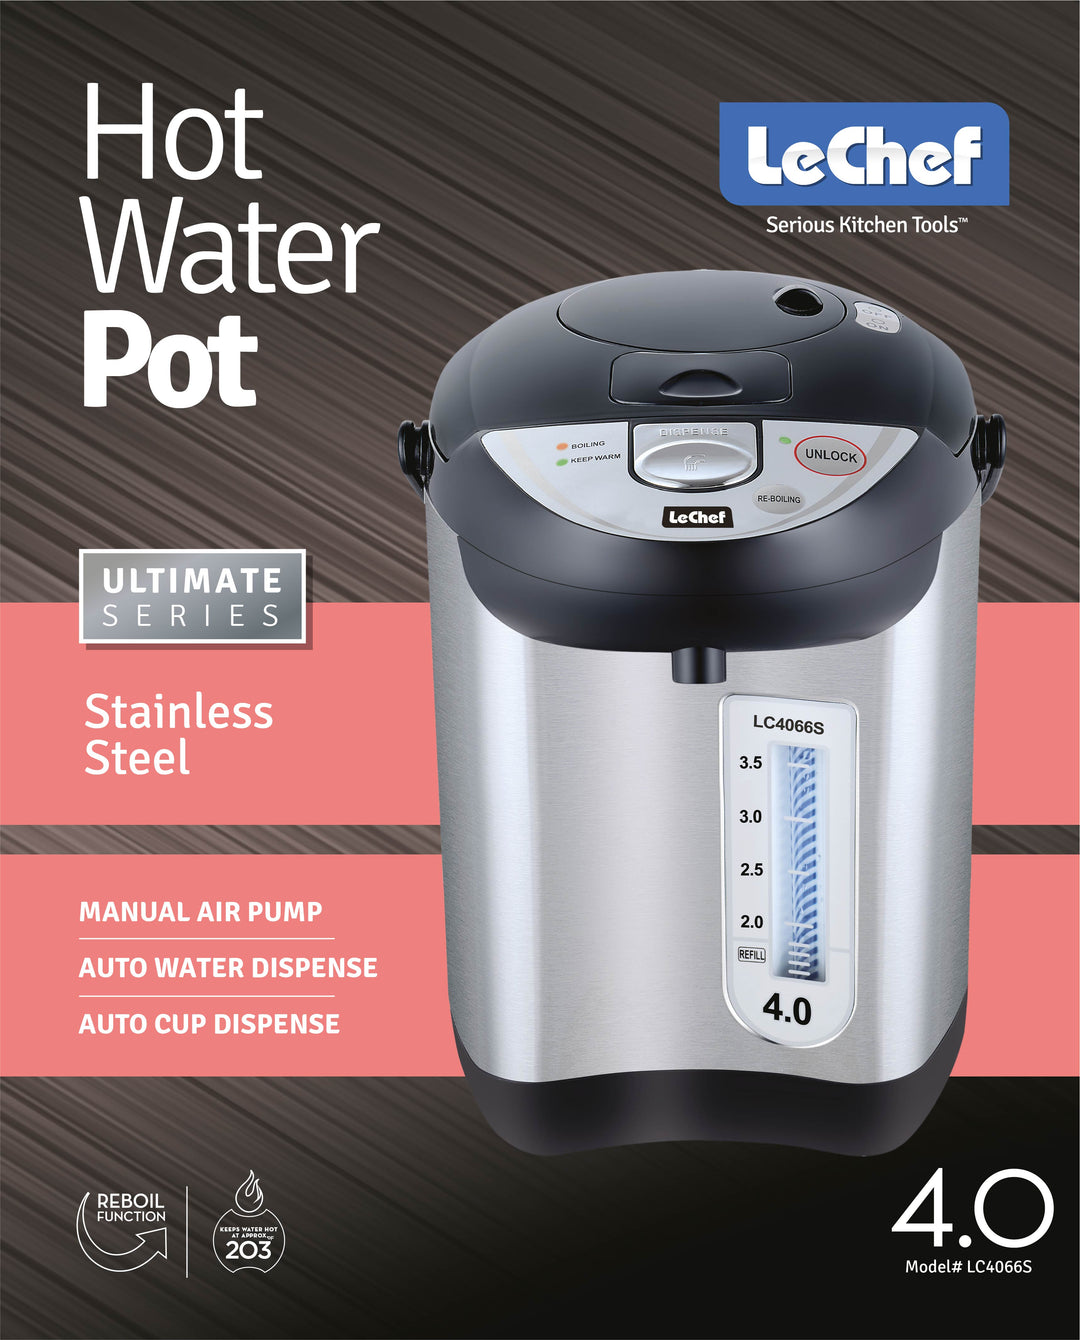 LE'CHEF ELECTRIC HOT WATER POT 4.0 QT MODEL# LC4066S